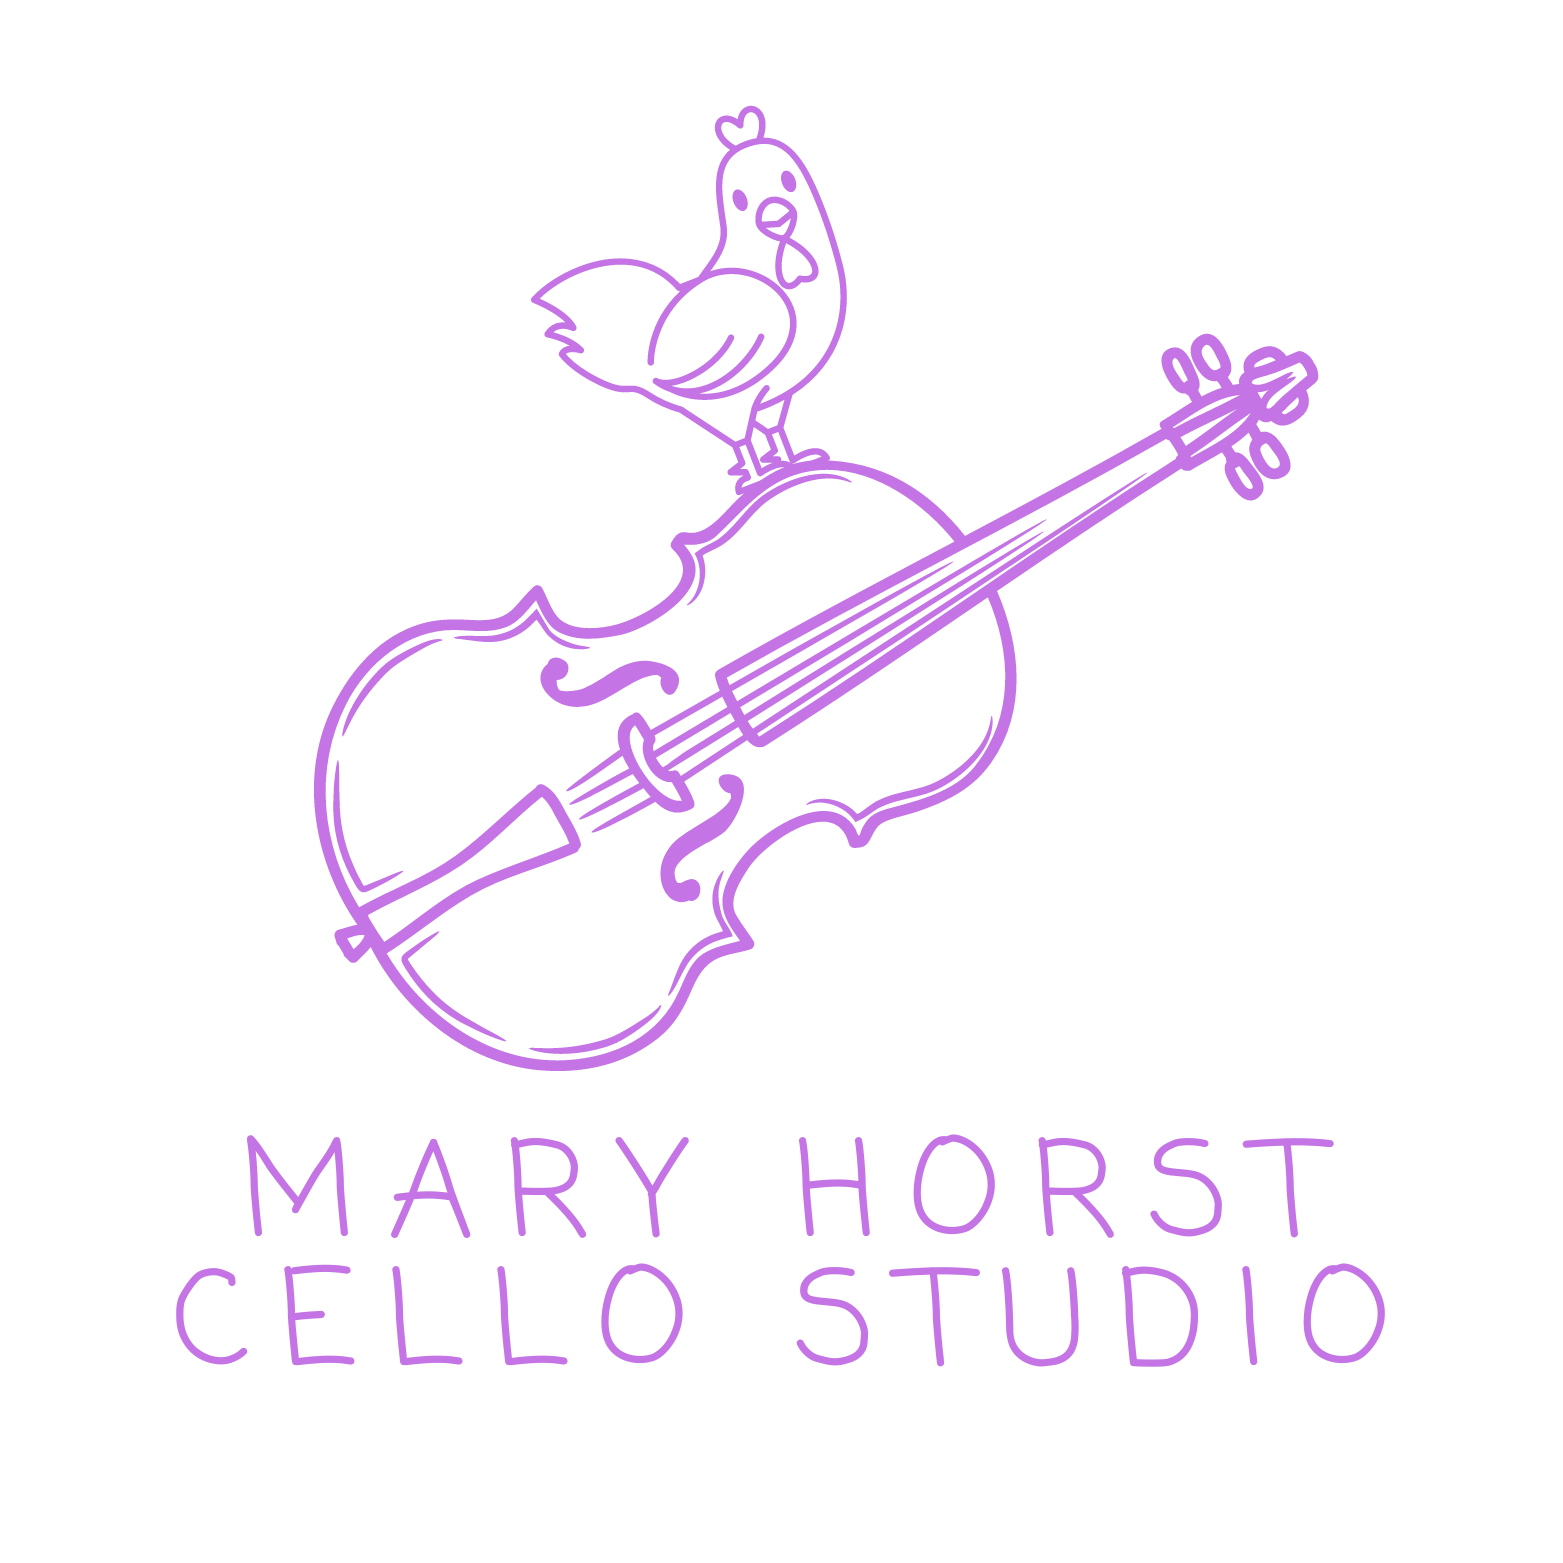 Mary Horst Cello Studio